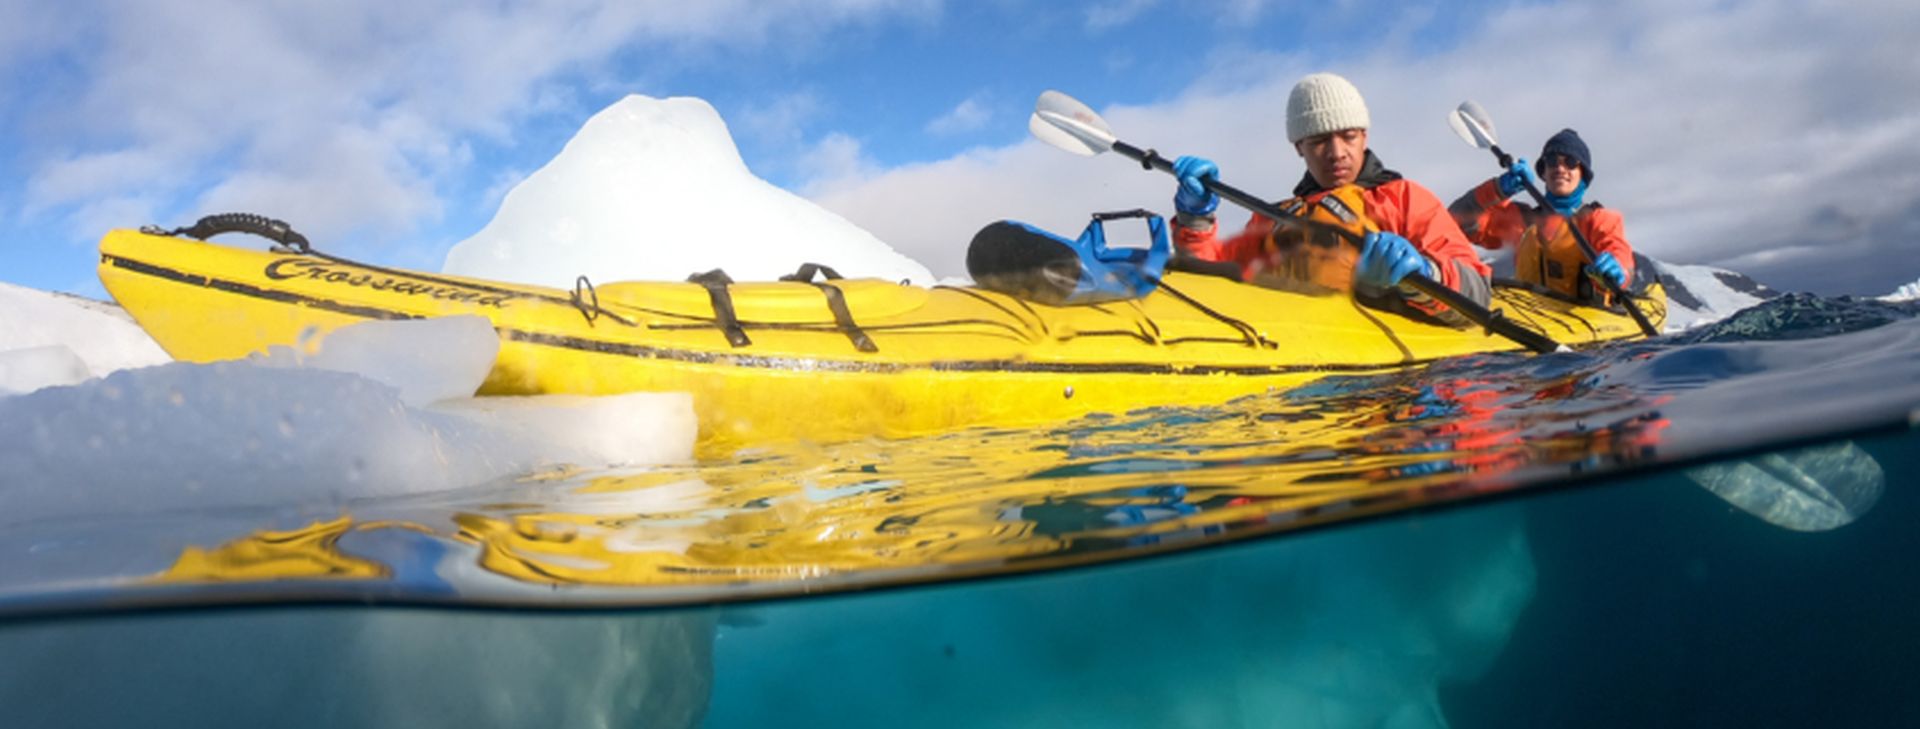 A'aifou and Owain Kayaking in Antarctica